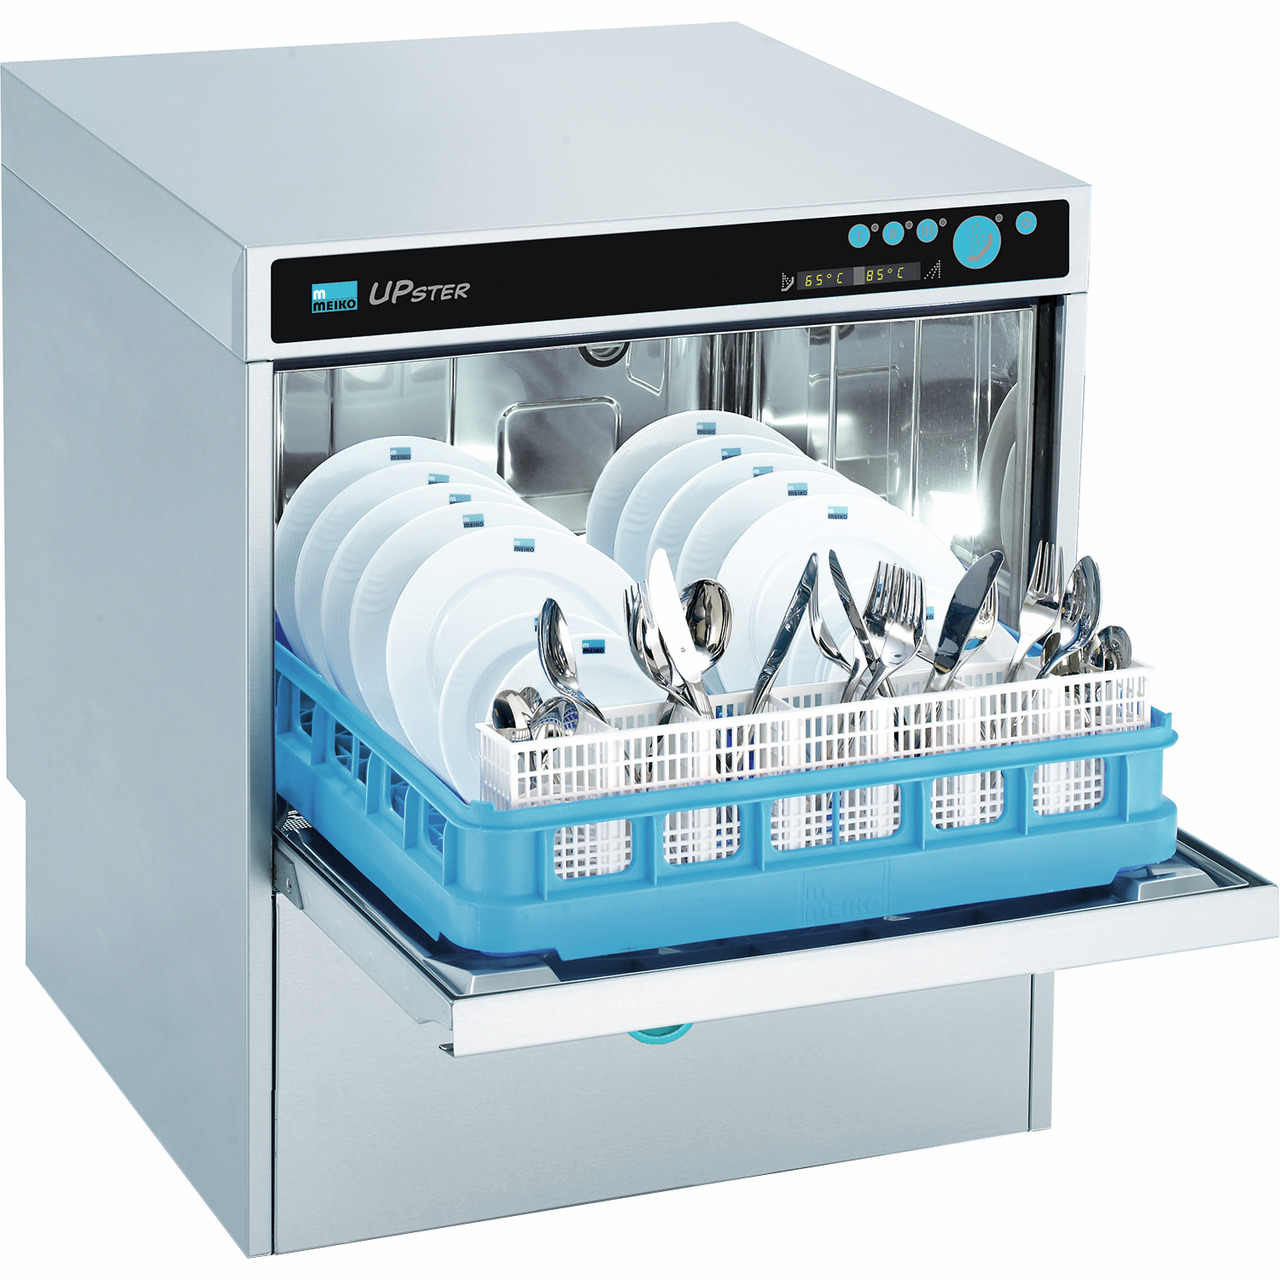 Gläser-/Geschirrspülmaschine Upster U500 G Laugenp/ Dosierung/ Drucksteigerungspumpe